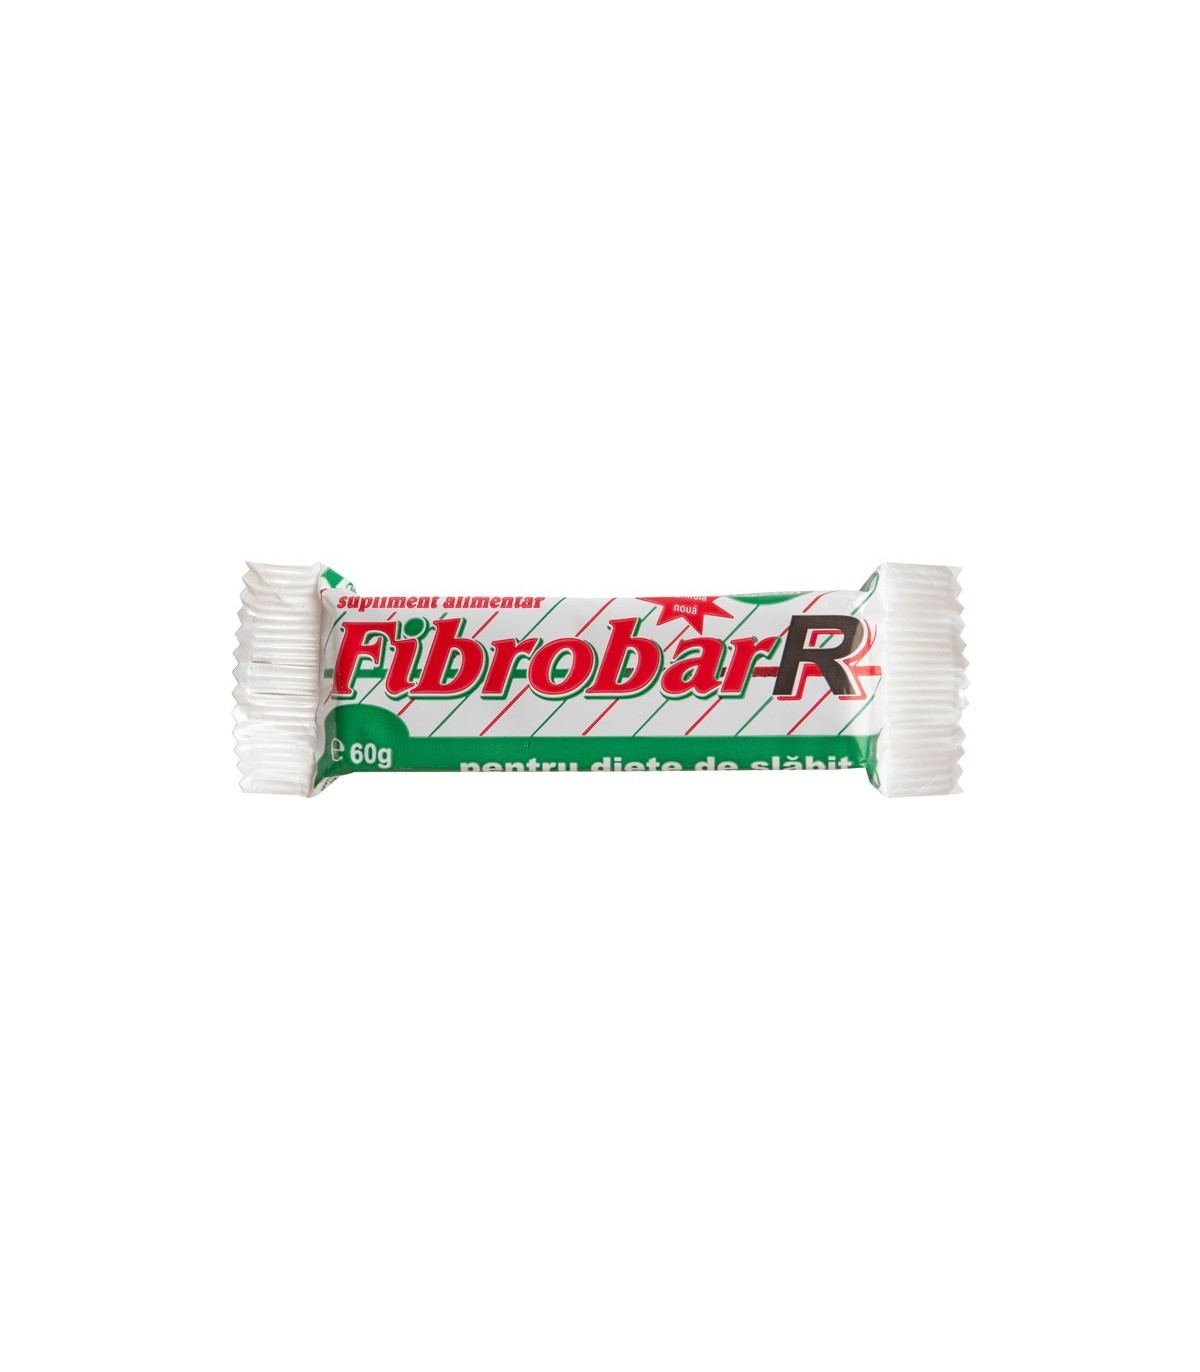 Produse dietetice - Fibro Bar-R baton pentru slabit 60g (Redis), epastila.ro